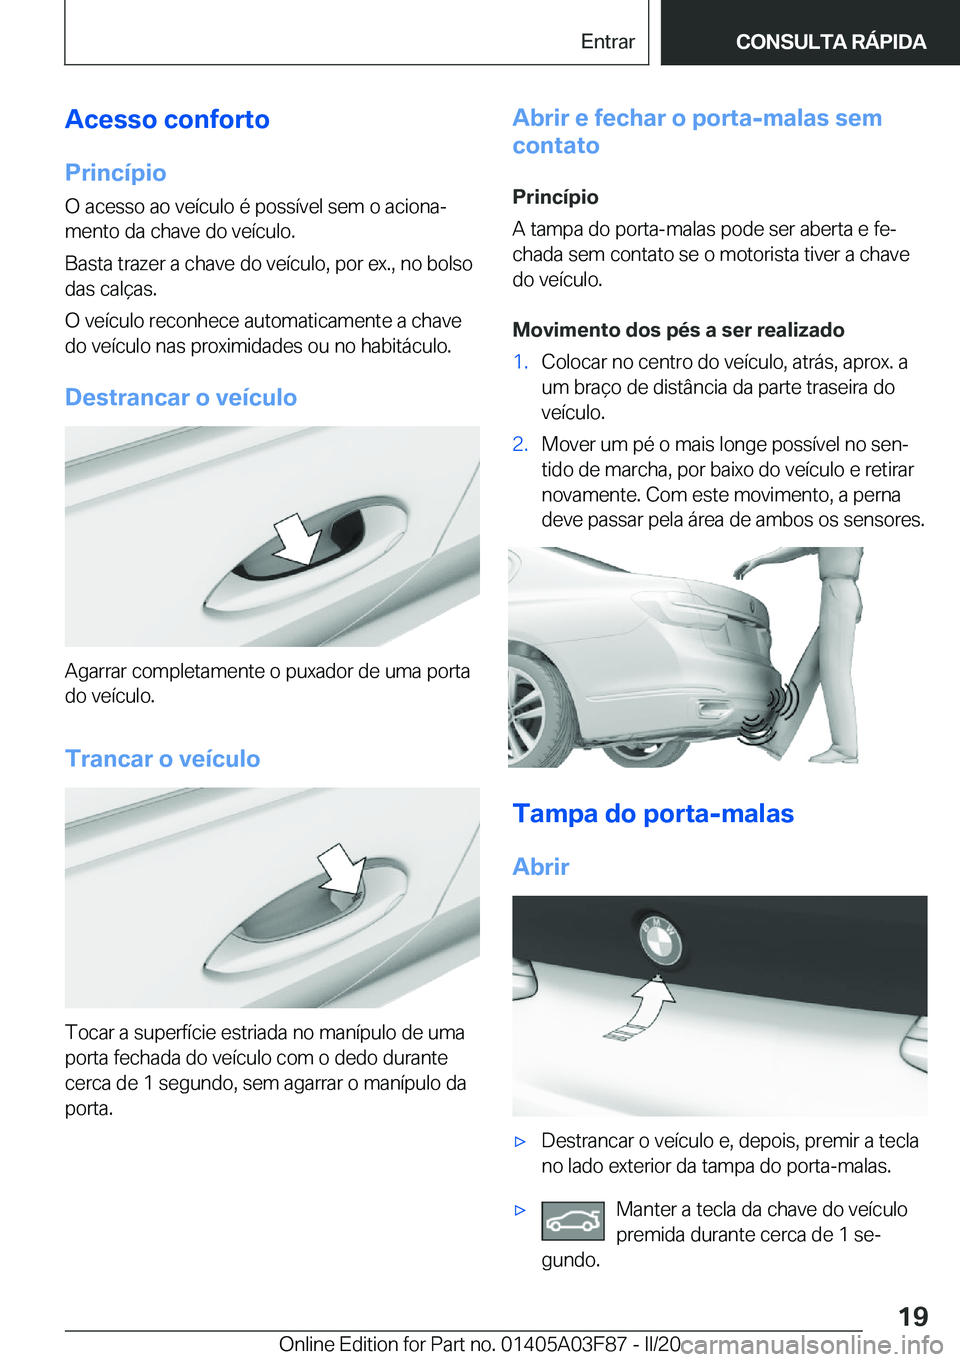 BMW 3 SERIES 2020  Manual do condutor (in Portuguese) �A�c�e�s�s�o��c�o�n�f�o�r�t�o
�P�r�i�n�c�